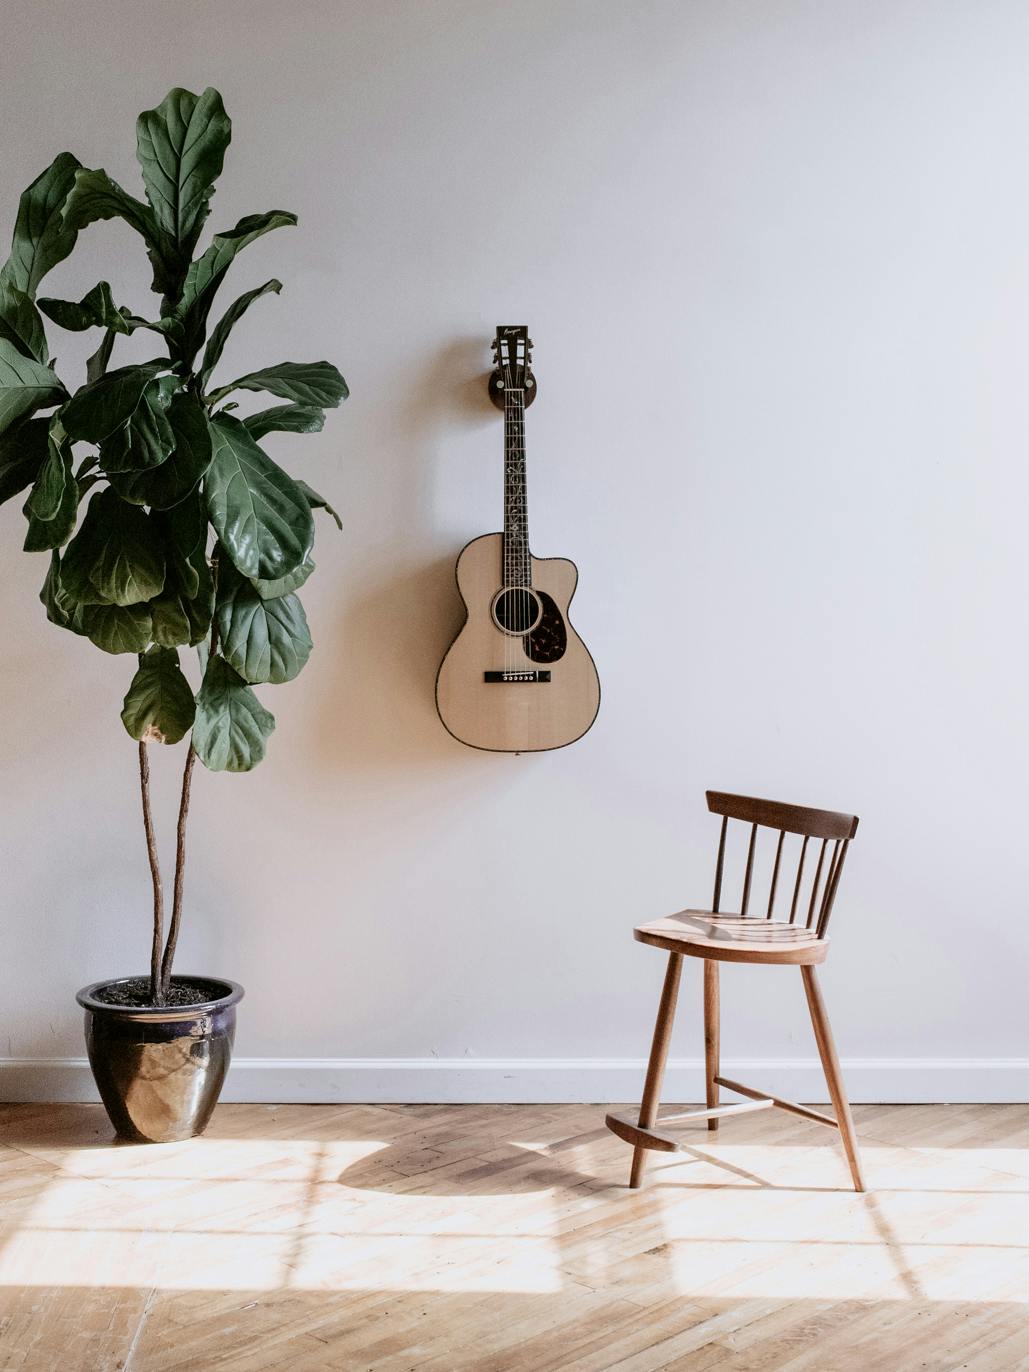 Hyla Guitar Wall Hanger - American Music Furniture